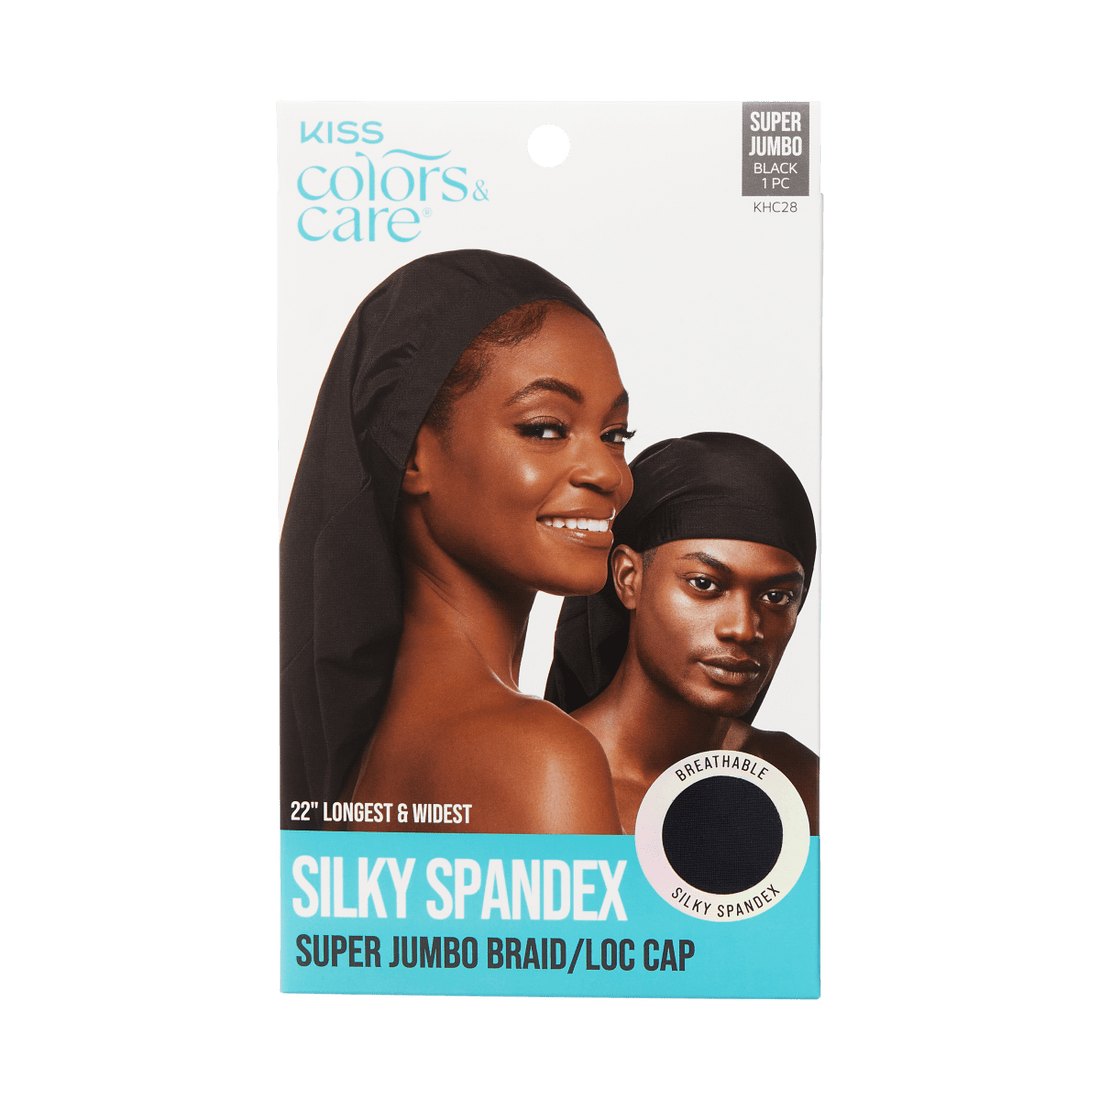 KISS Colors &amp; Care Silky Spandex Braid/Loc Cap, Super Jumbo – Black